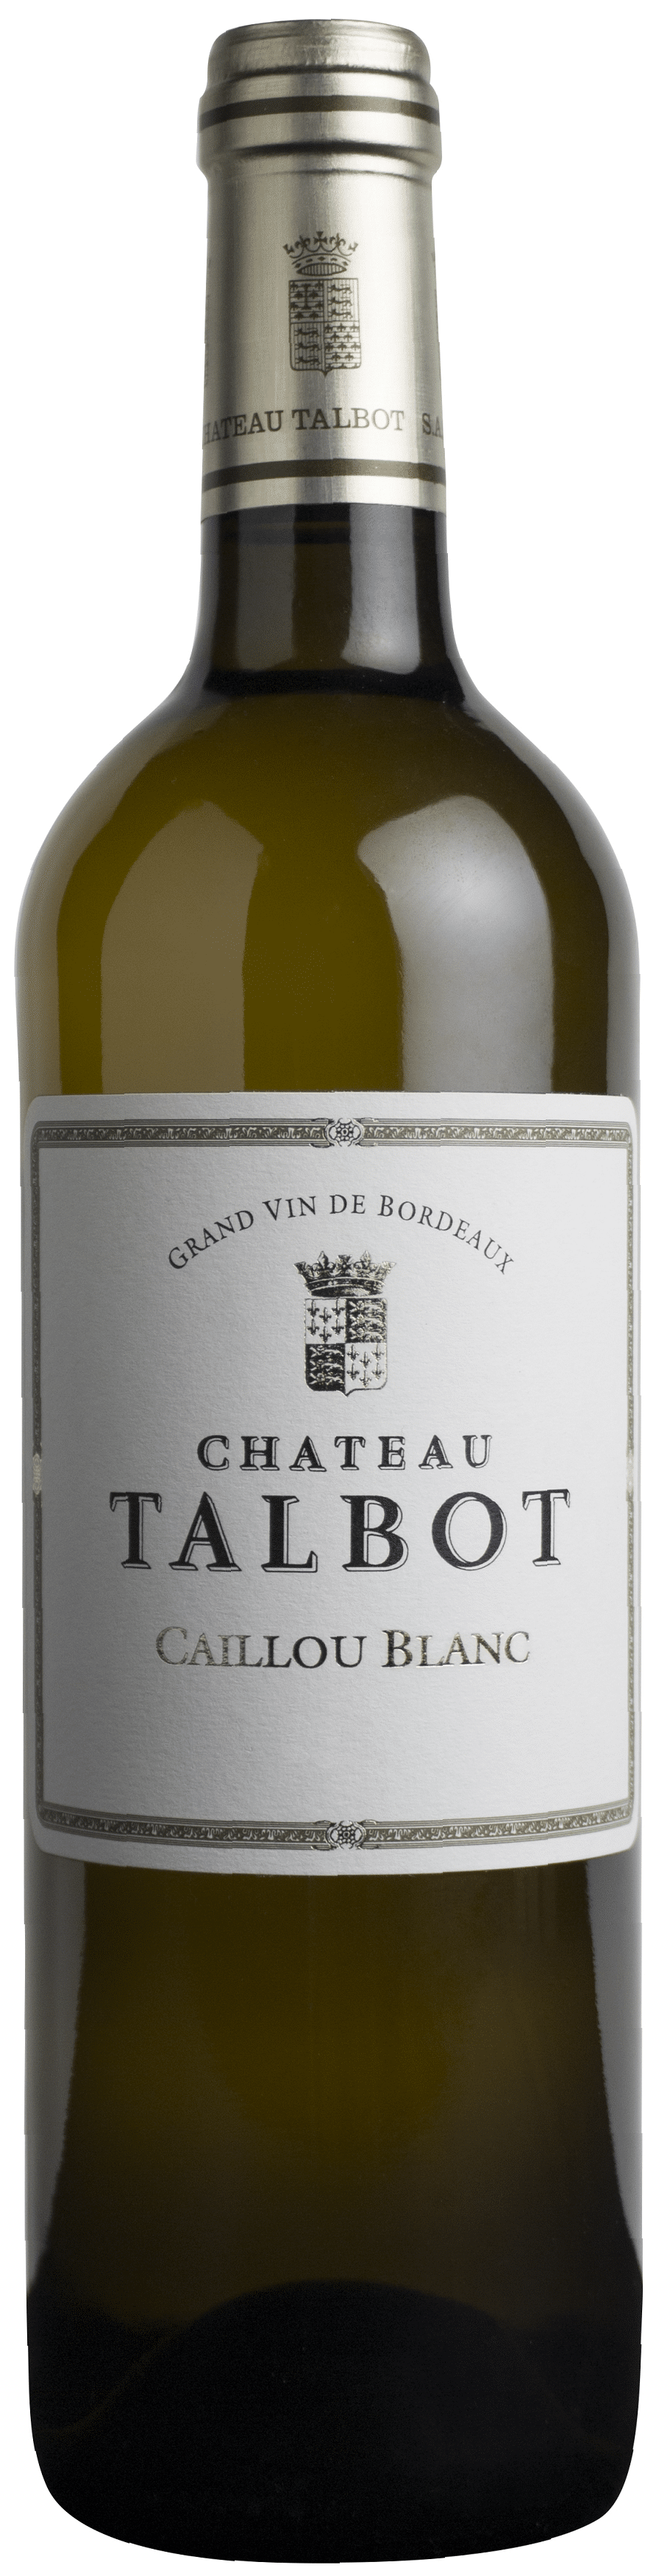 Chateau Talbot, Caillou Blanc, 2012